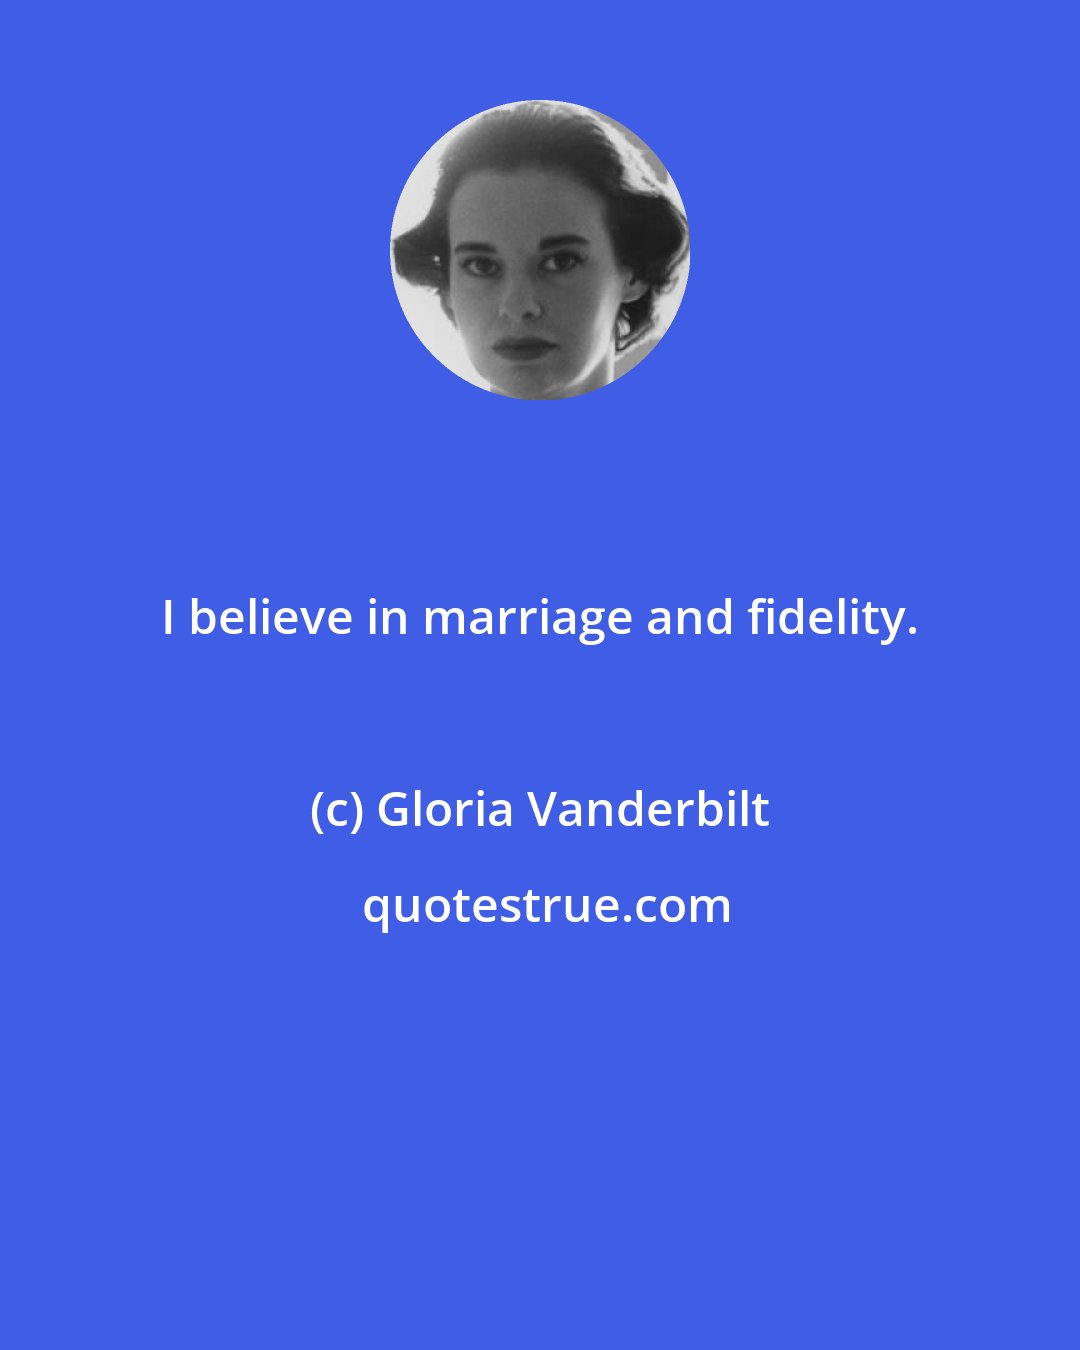 Gloria Vanderbilt: I believe in marriage and fidelity.